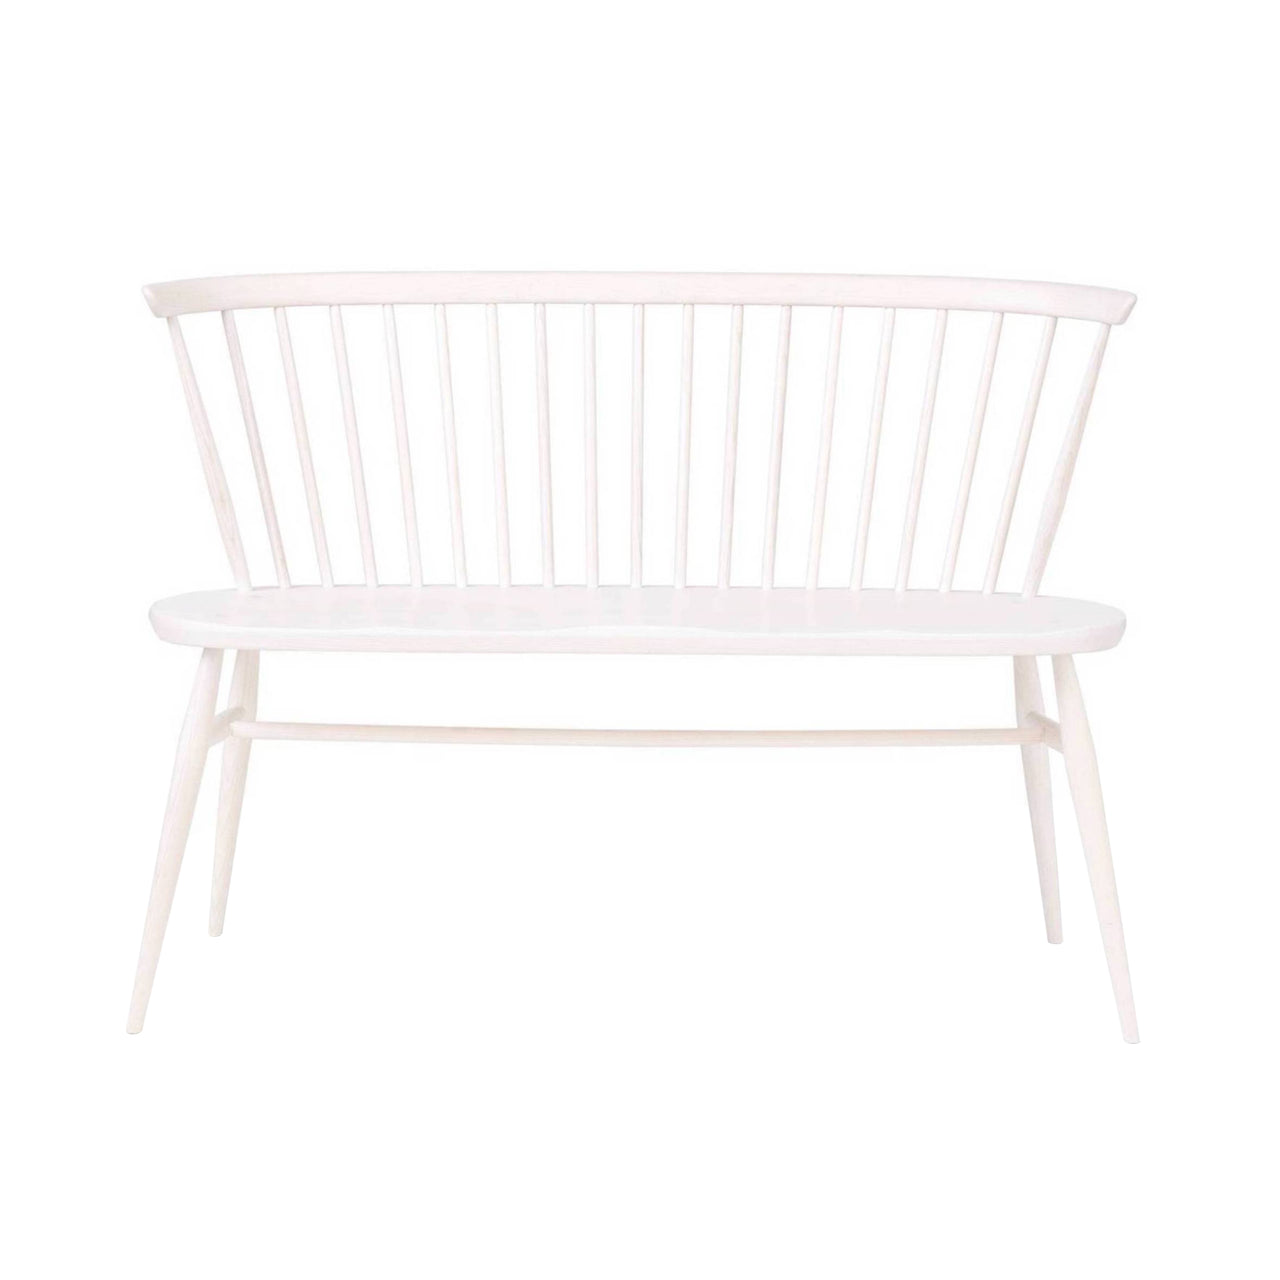 Originals Love Seat Bench: Off White